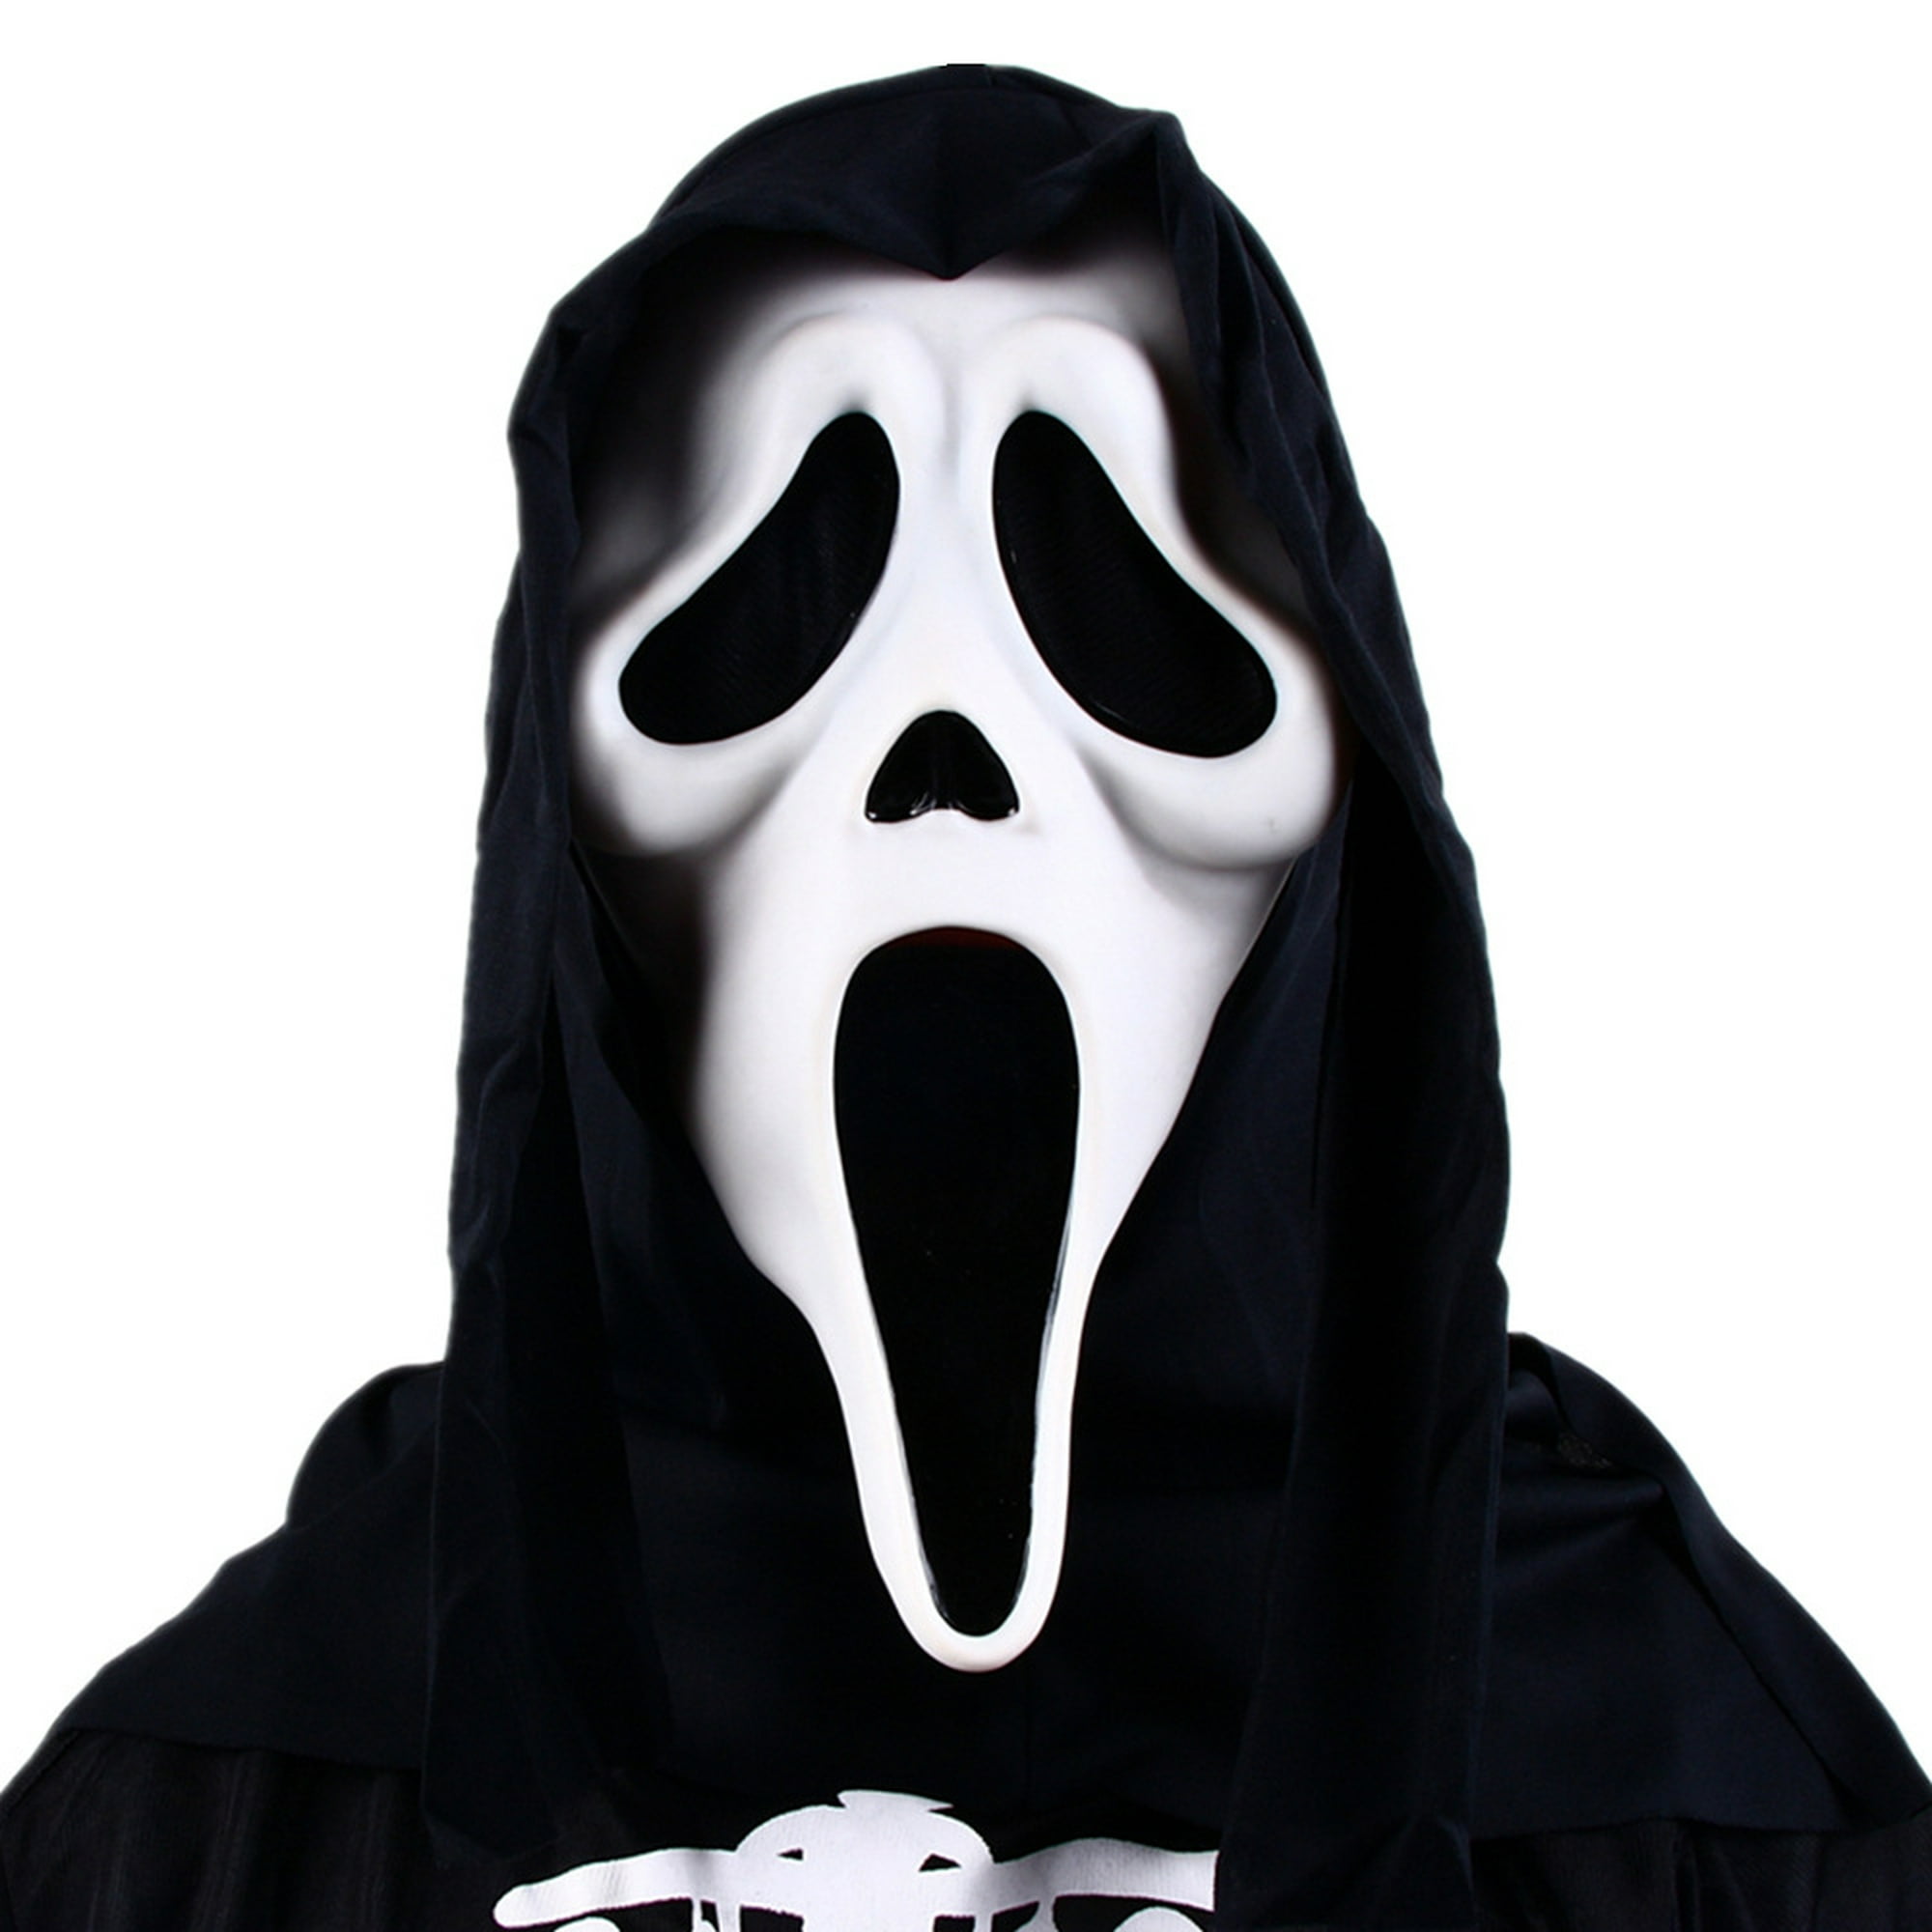 Máscara De Terror De Halloween Cara De Fantasma Aterrador Máscara De Fantasma Scream Ghost 